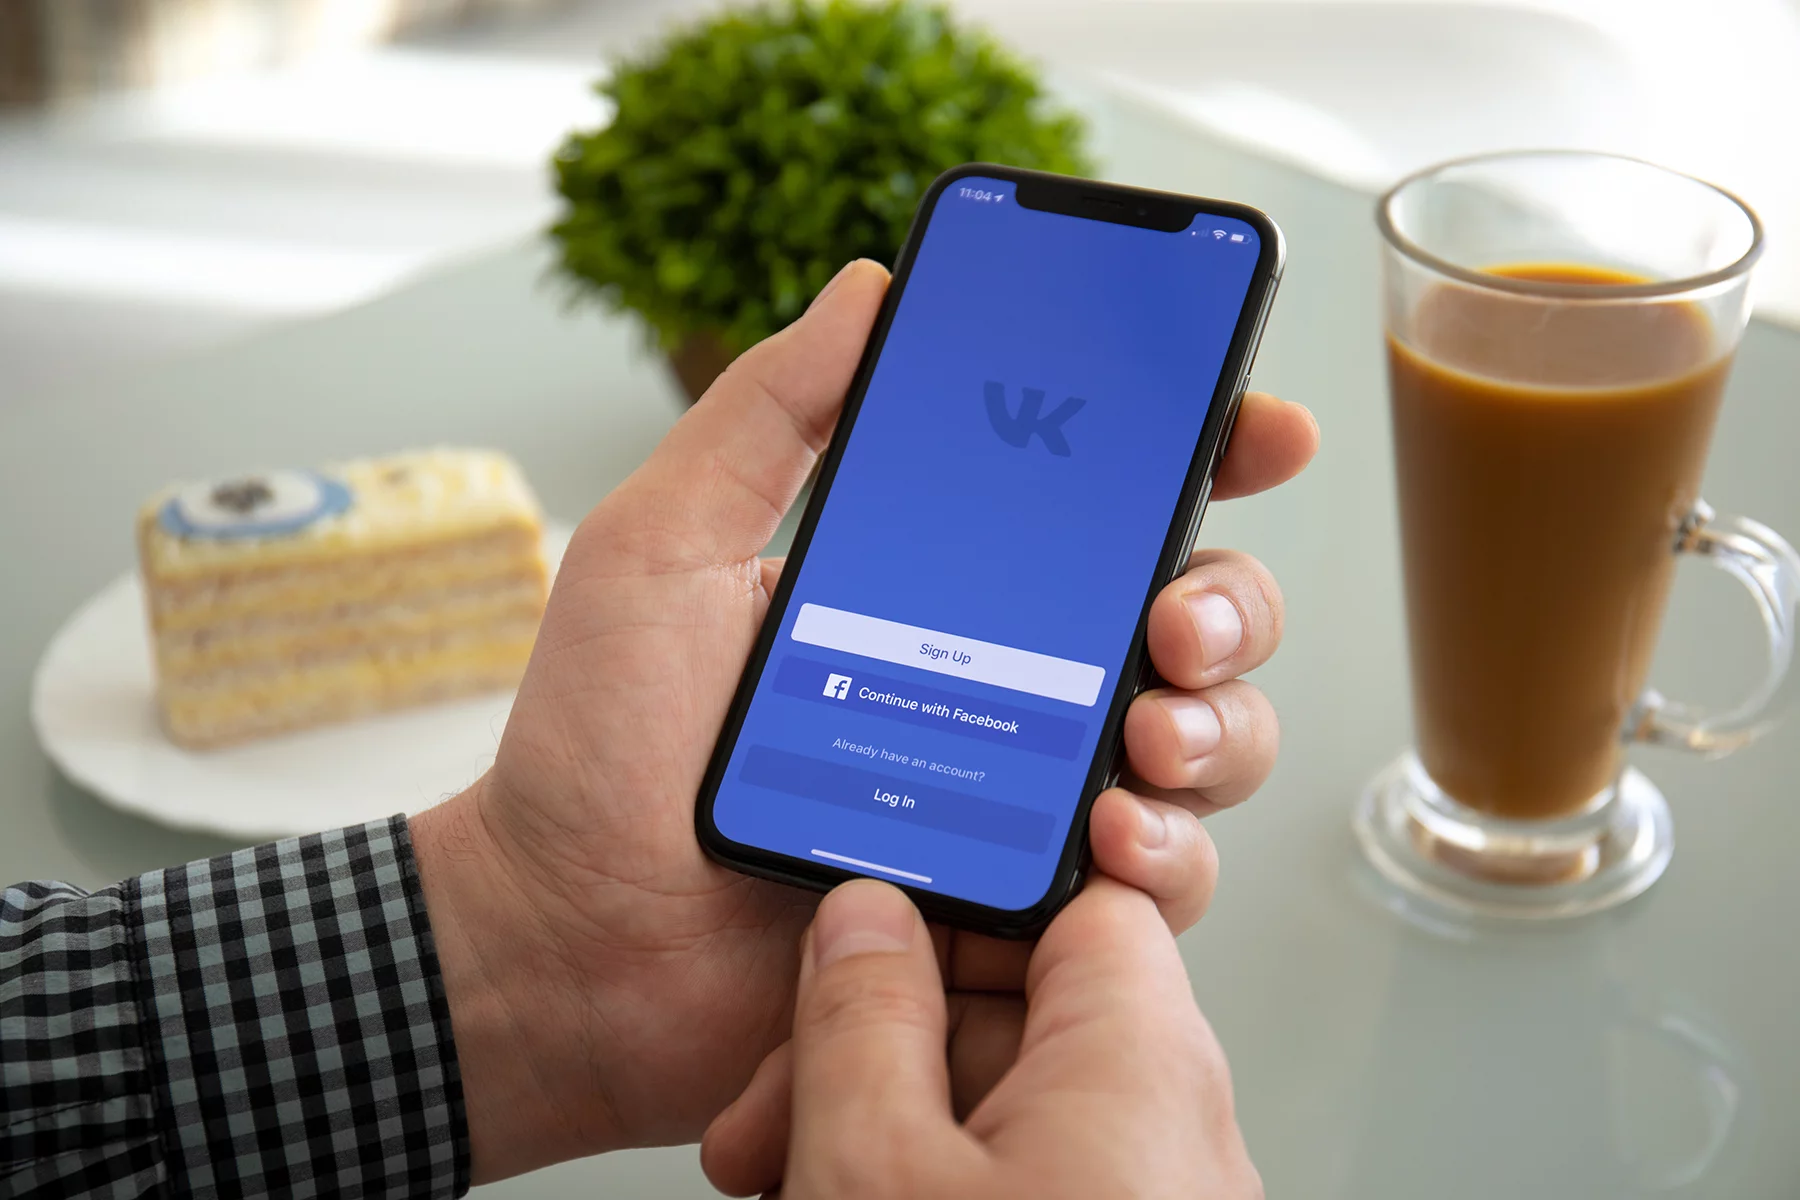 A phone showing Vkontakte app in a café